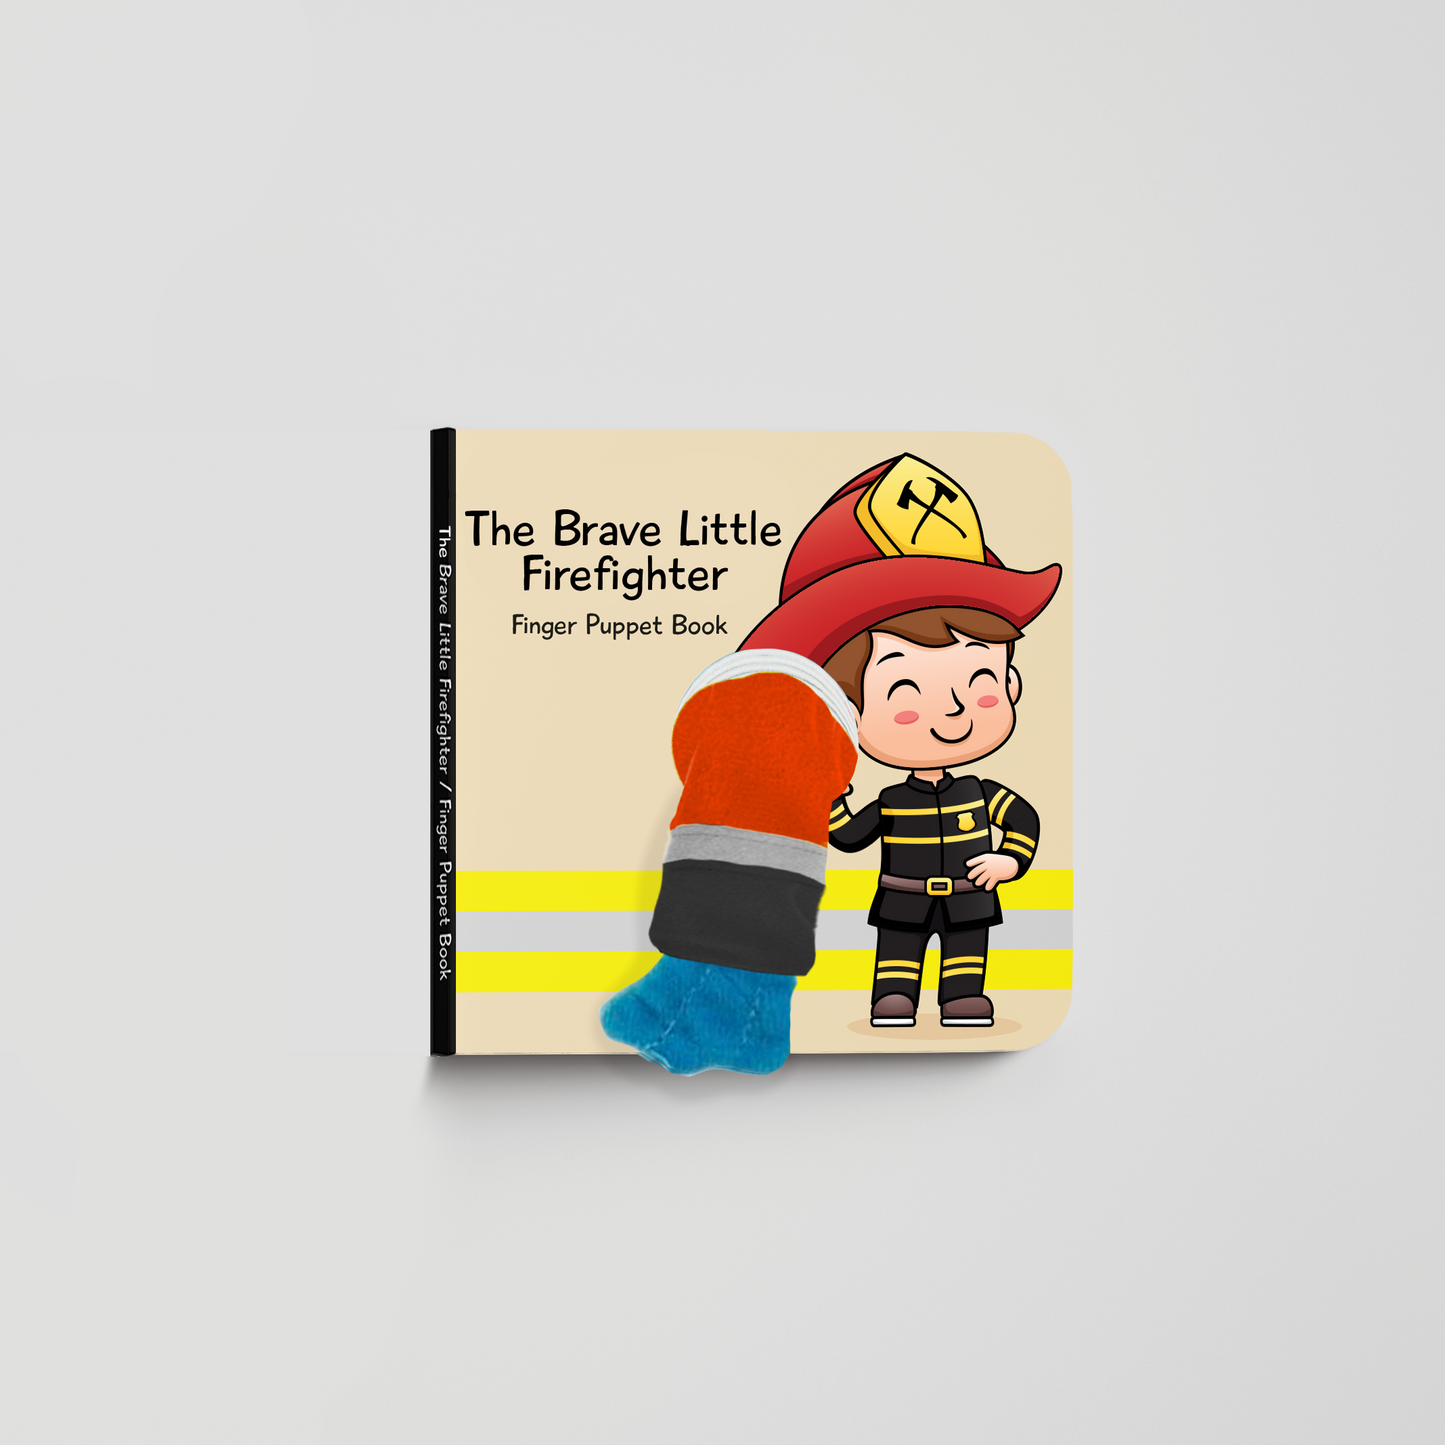 The Brave Little Firefighter